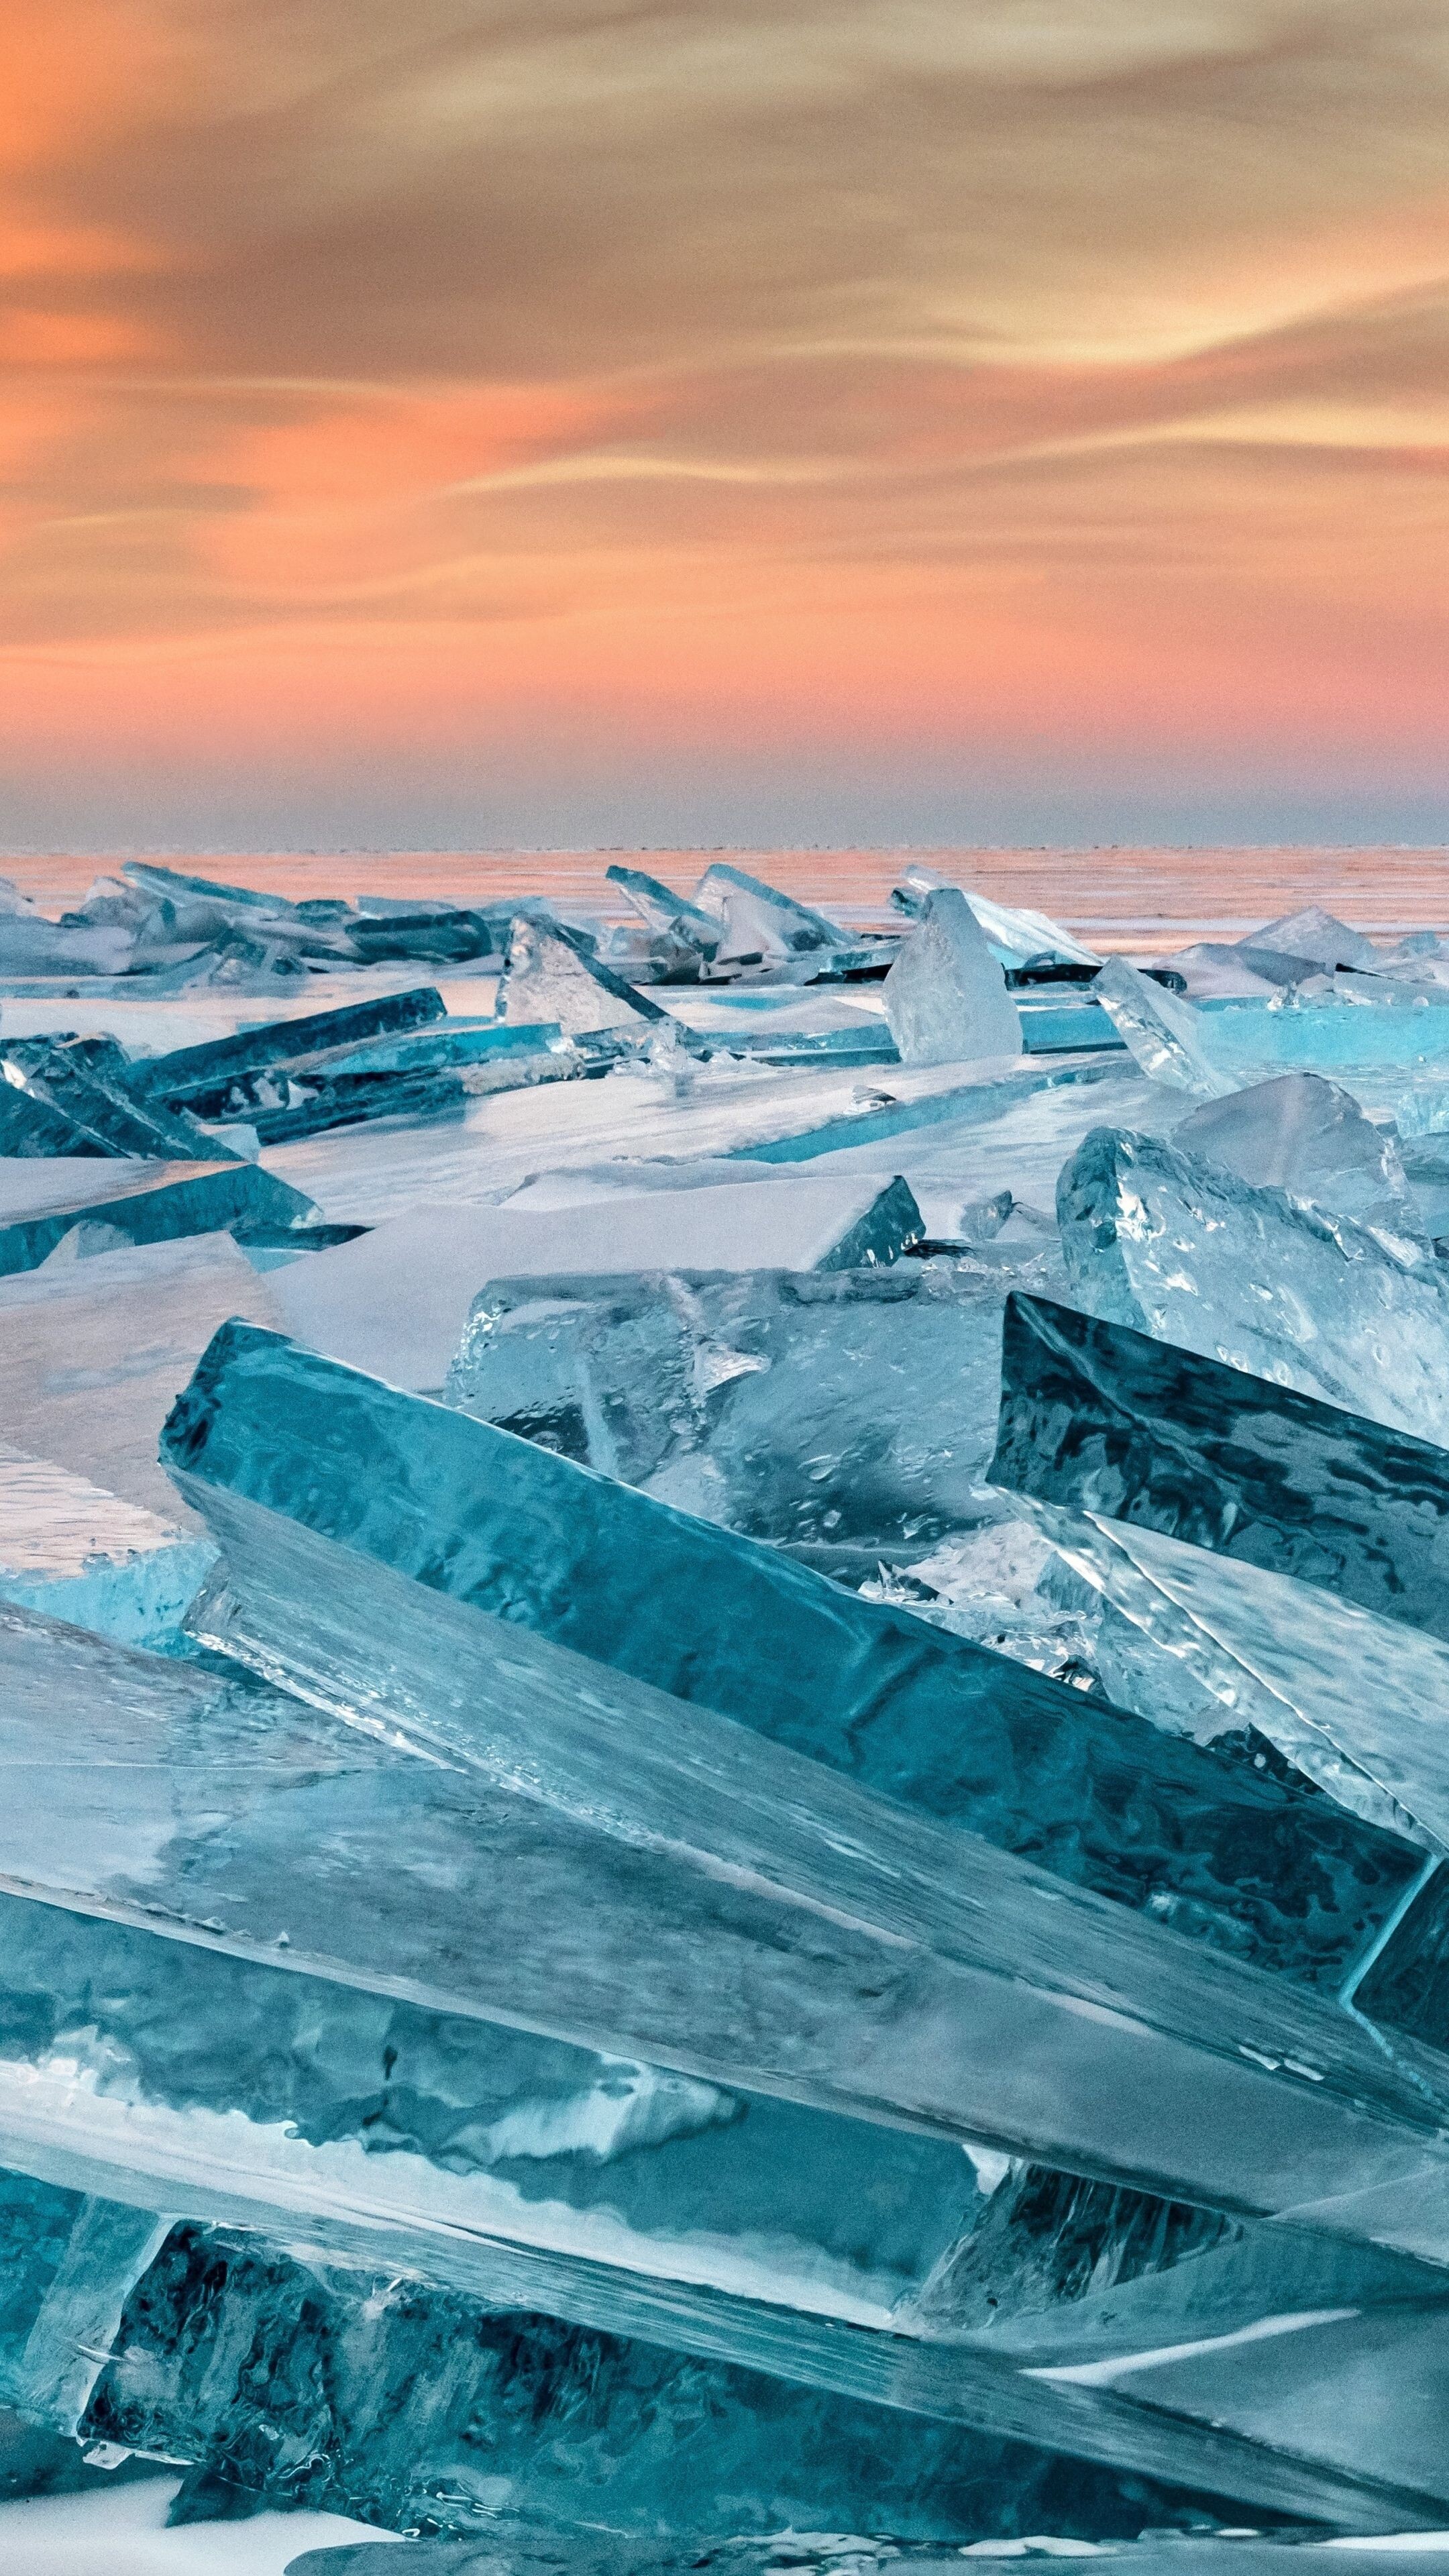 Glacier: Small broken icebergs, Nature, Beautiful landscape, Arctic landscape. 2160x3840 4K Wallpaper.